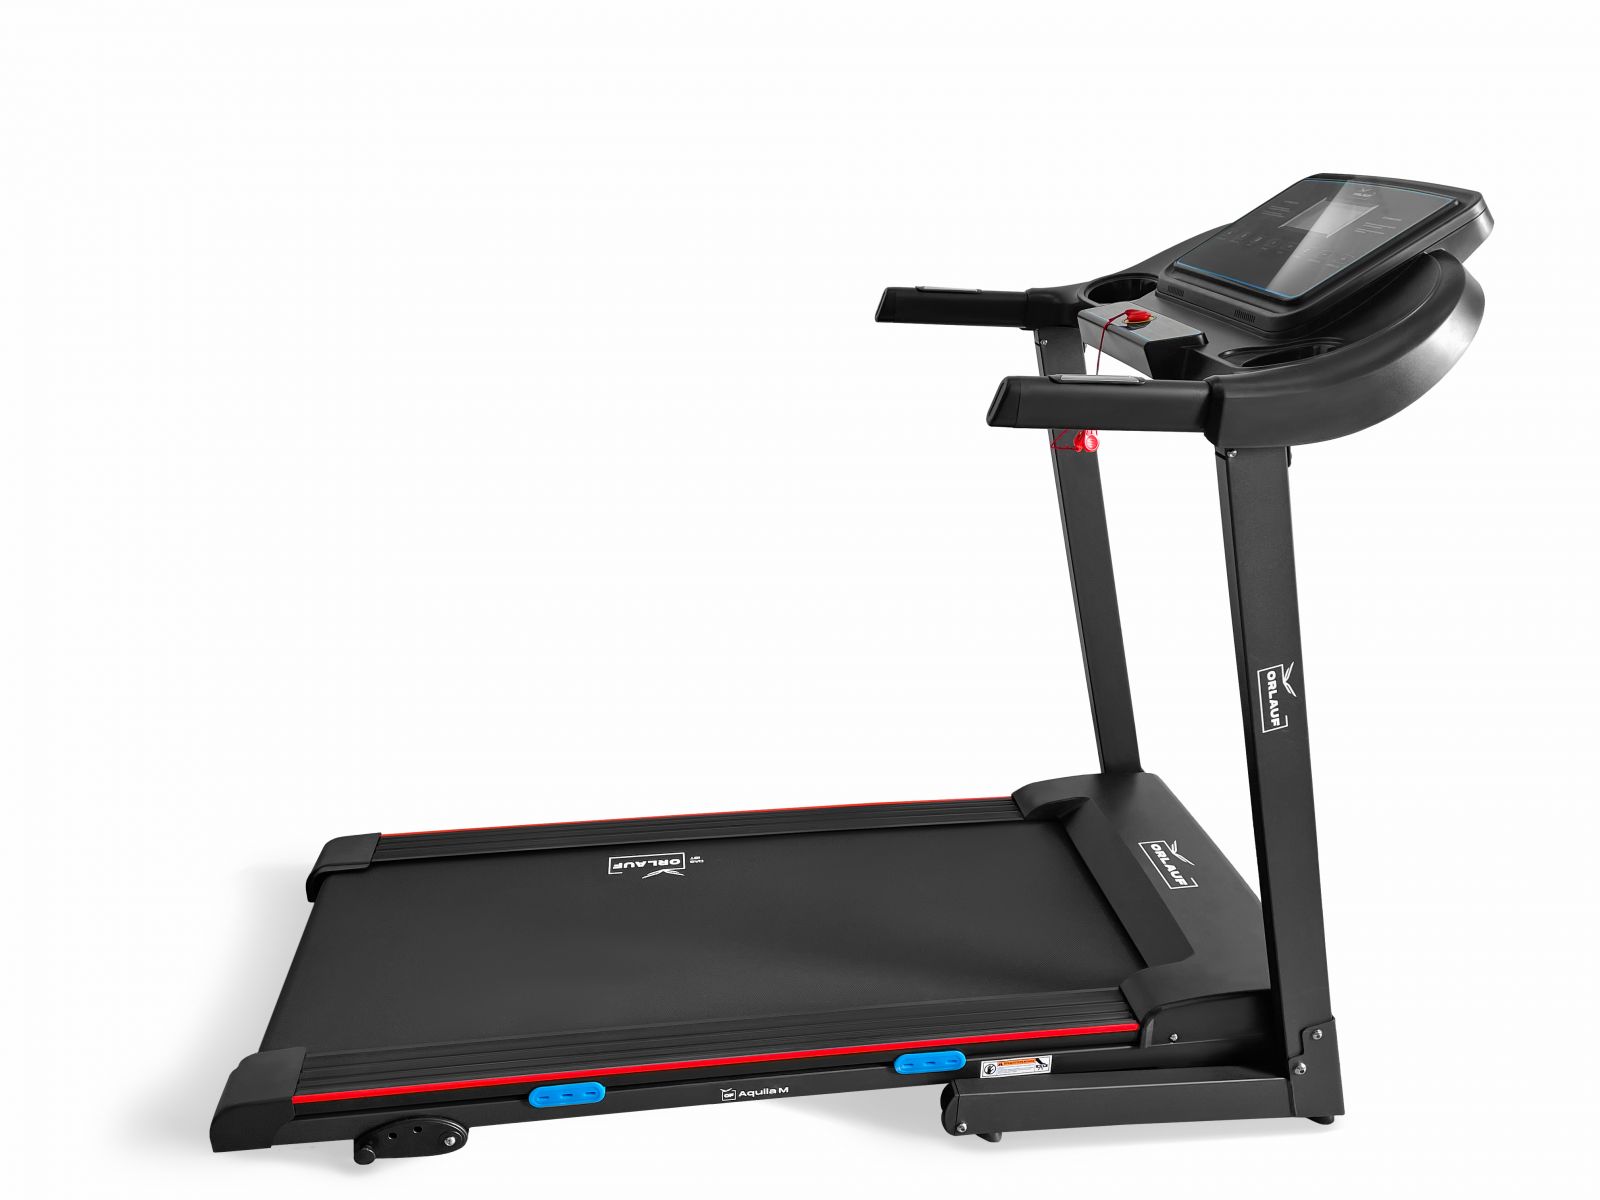 Photo of the Orlauf Fitness Aquila M treadmill - side view